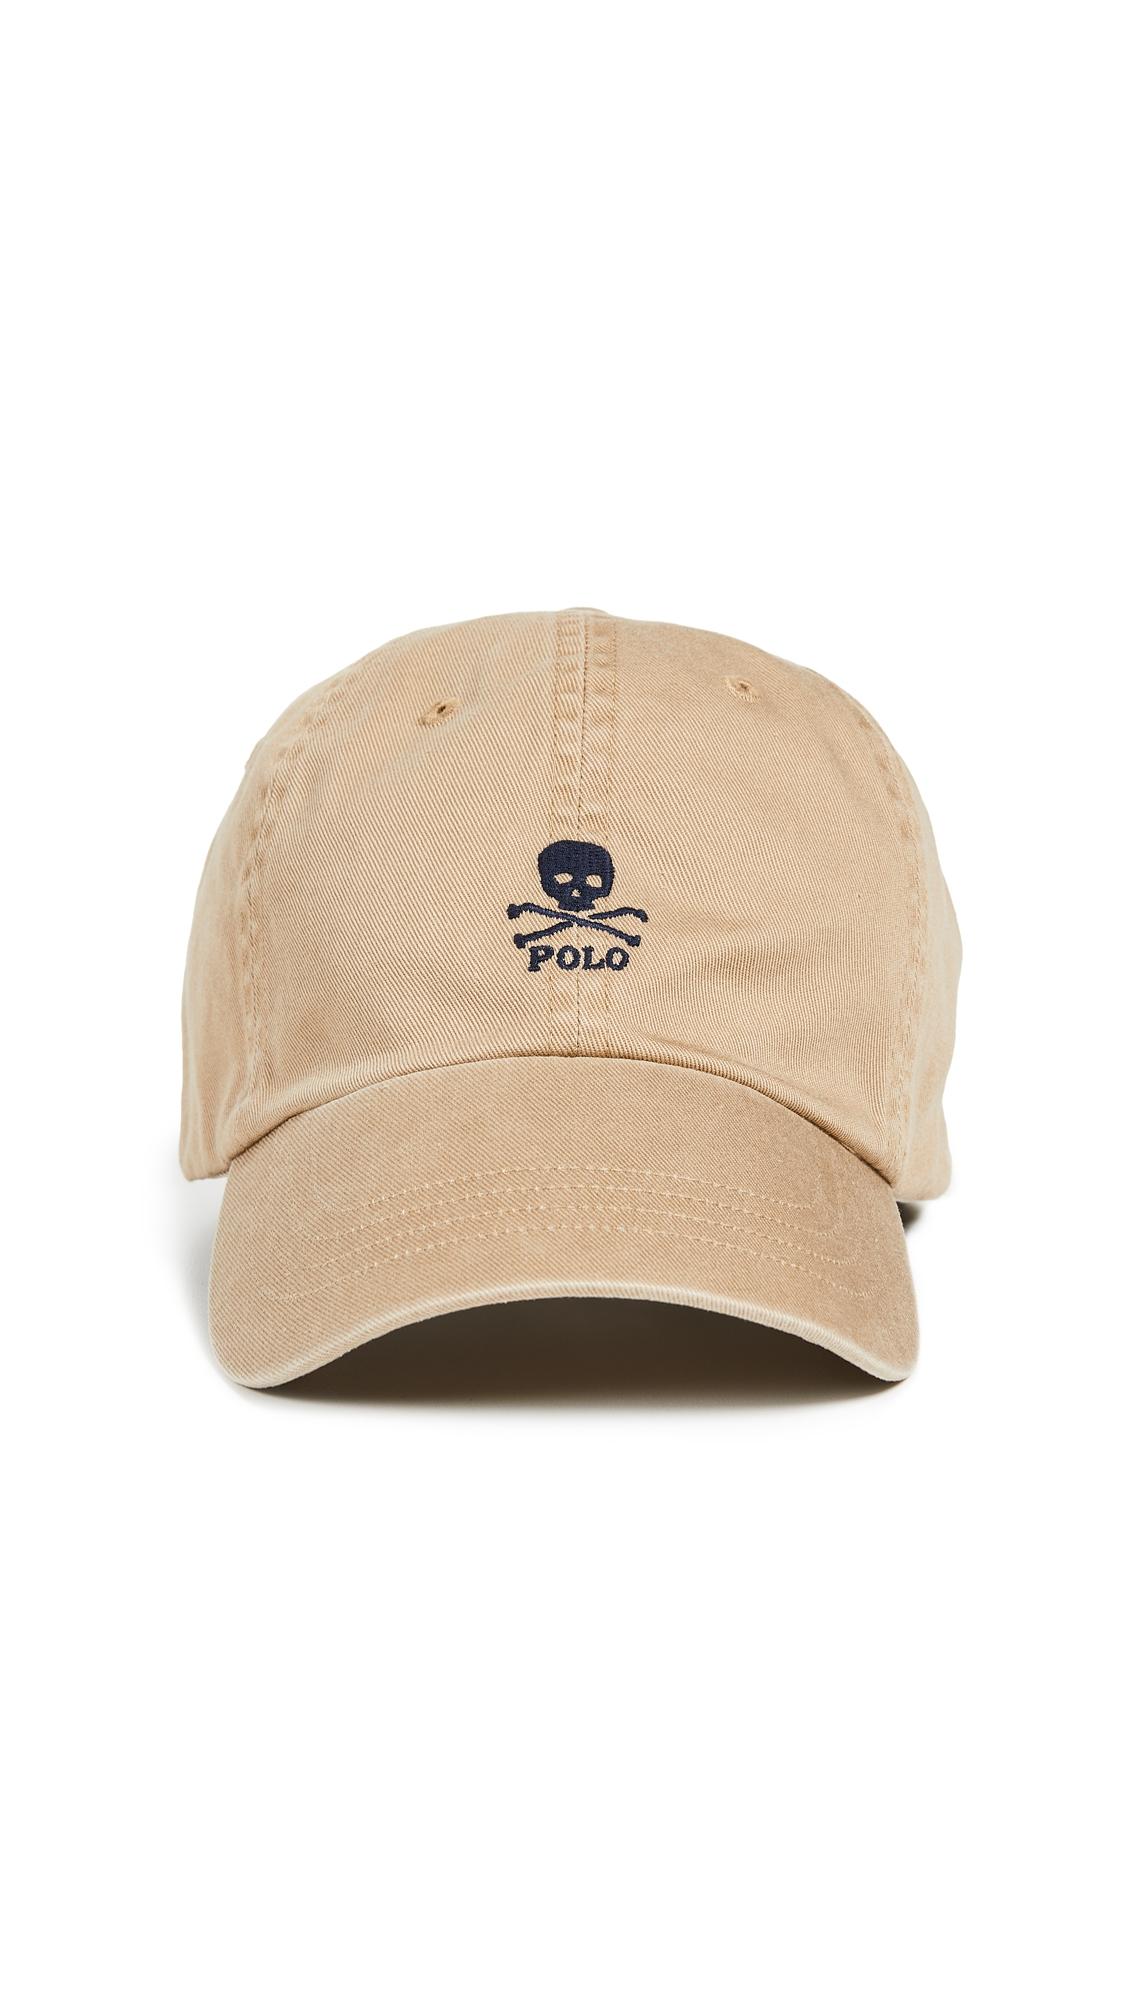 polo hat skull